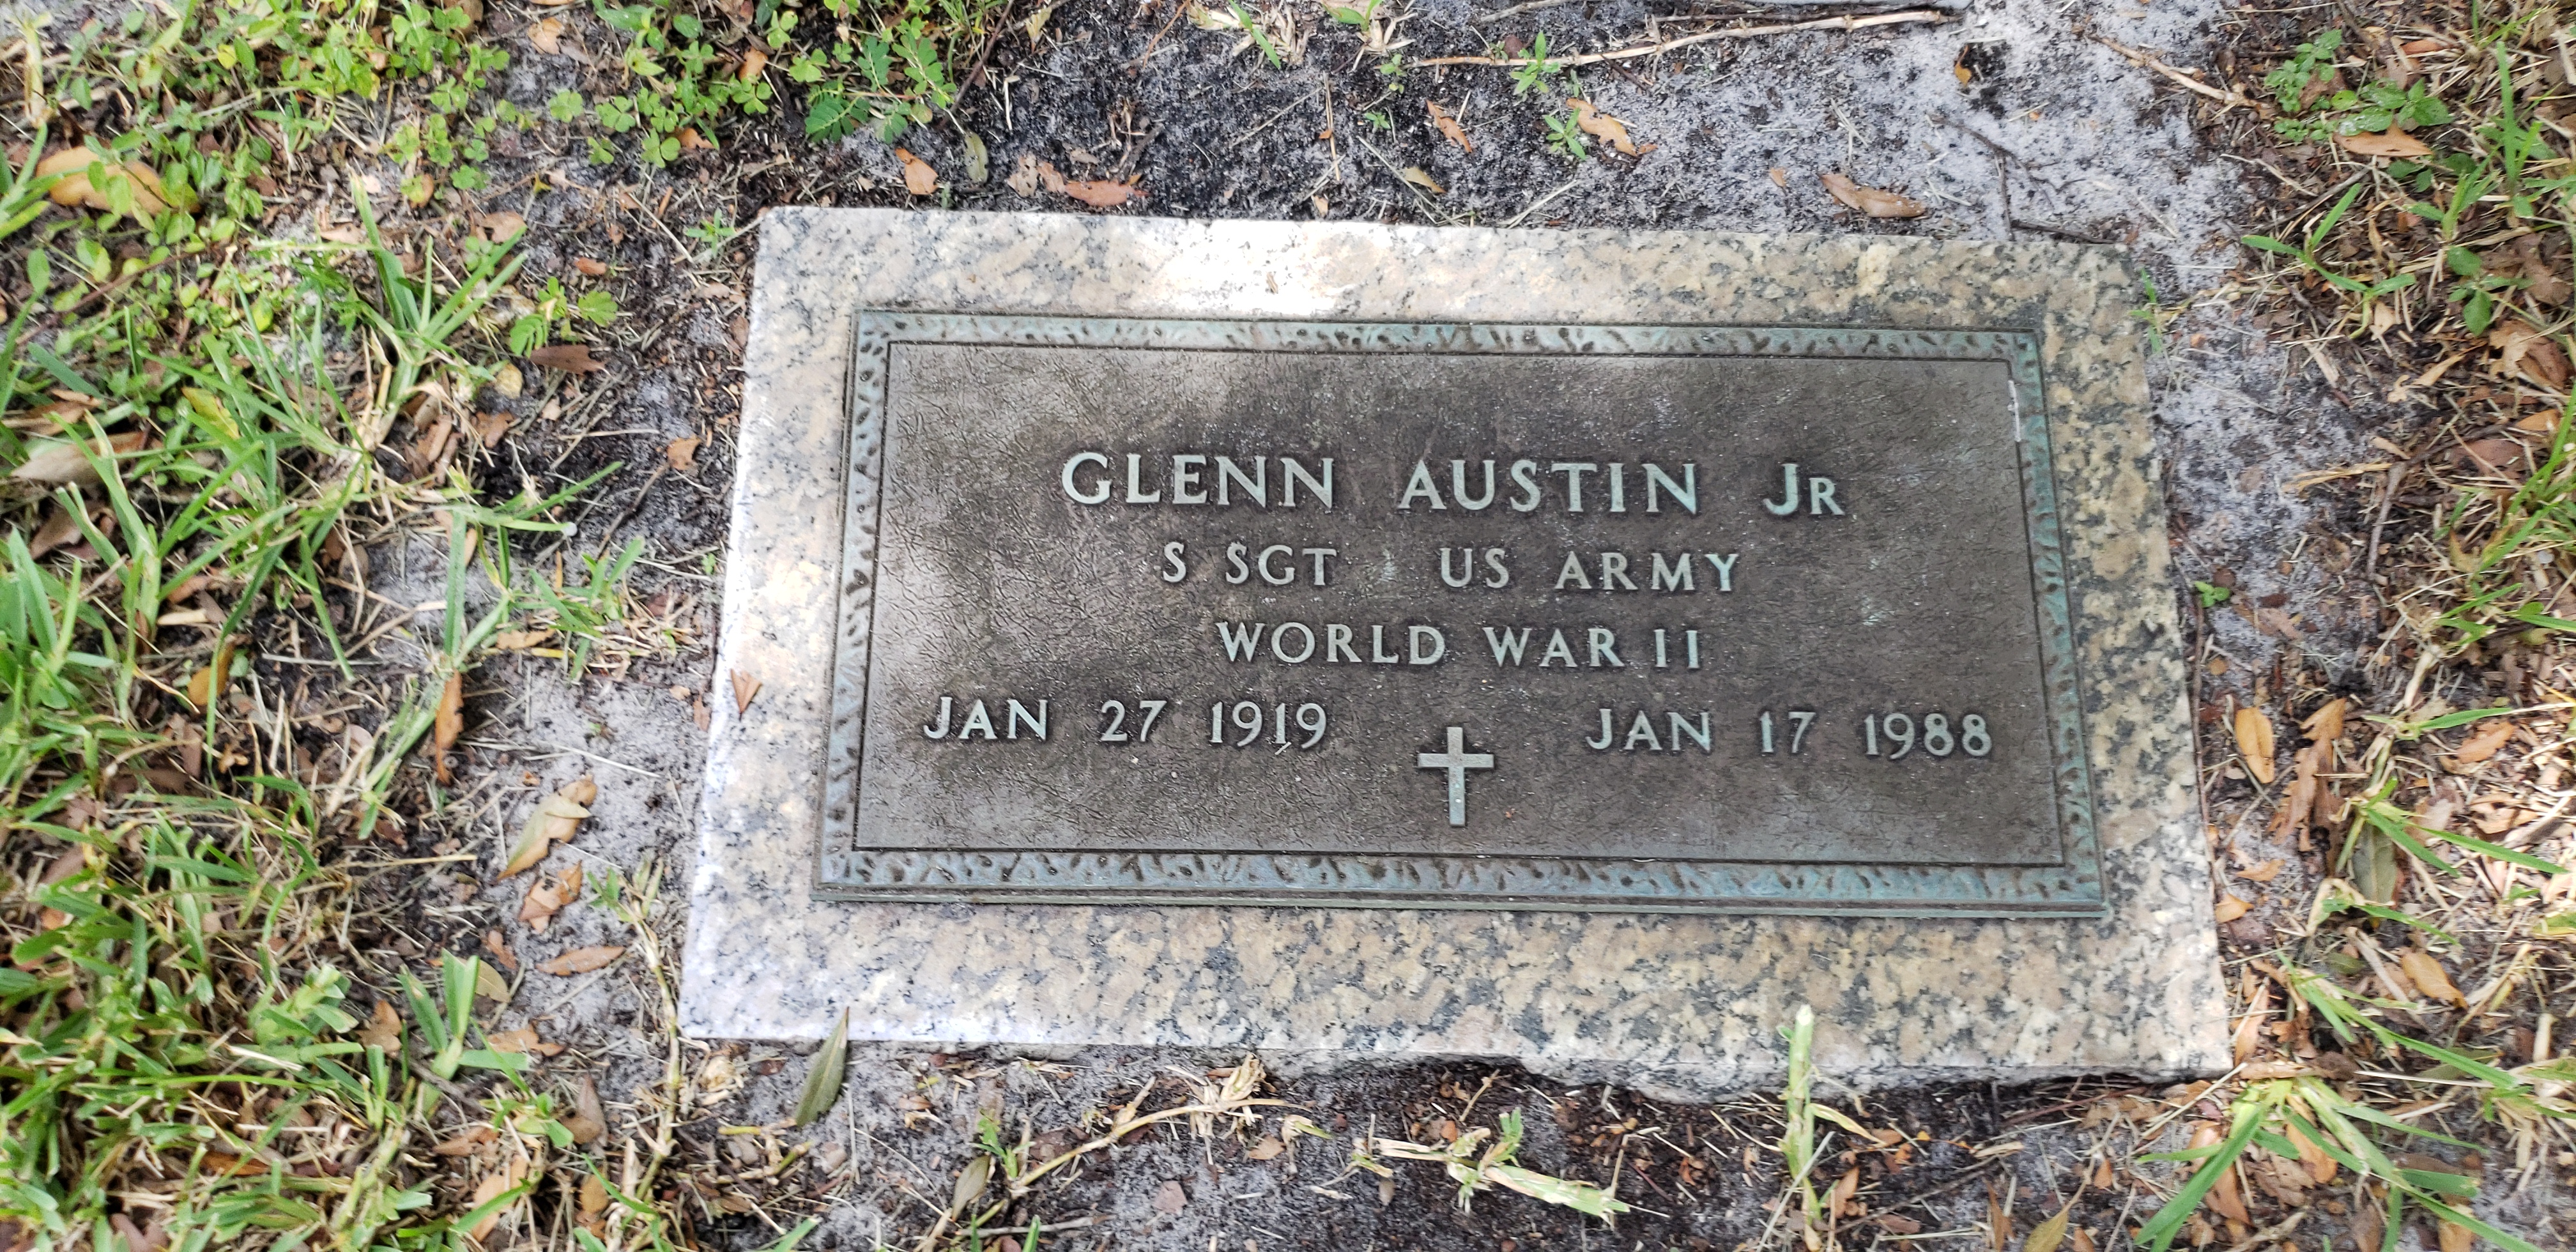 Glenn Austin, Jr